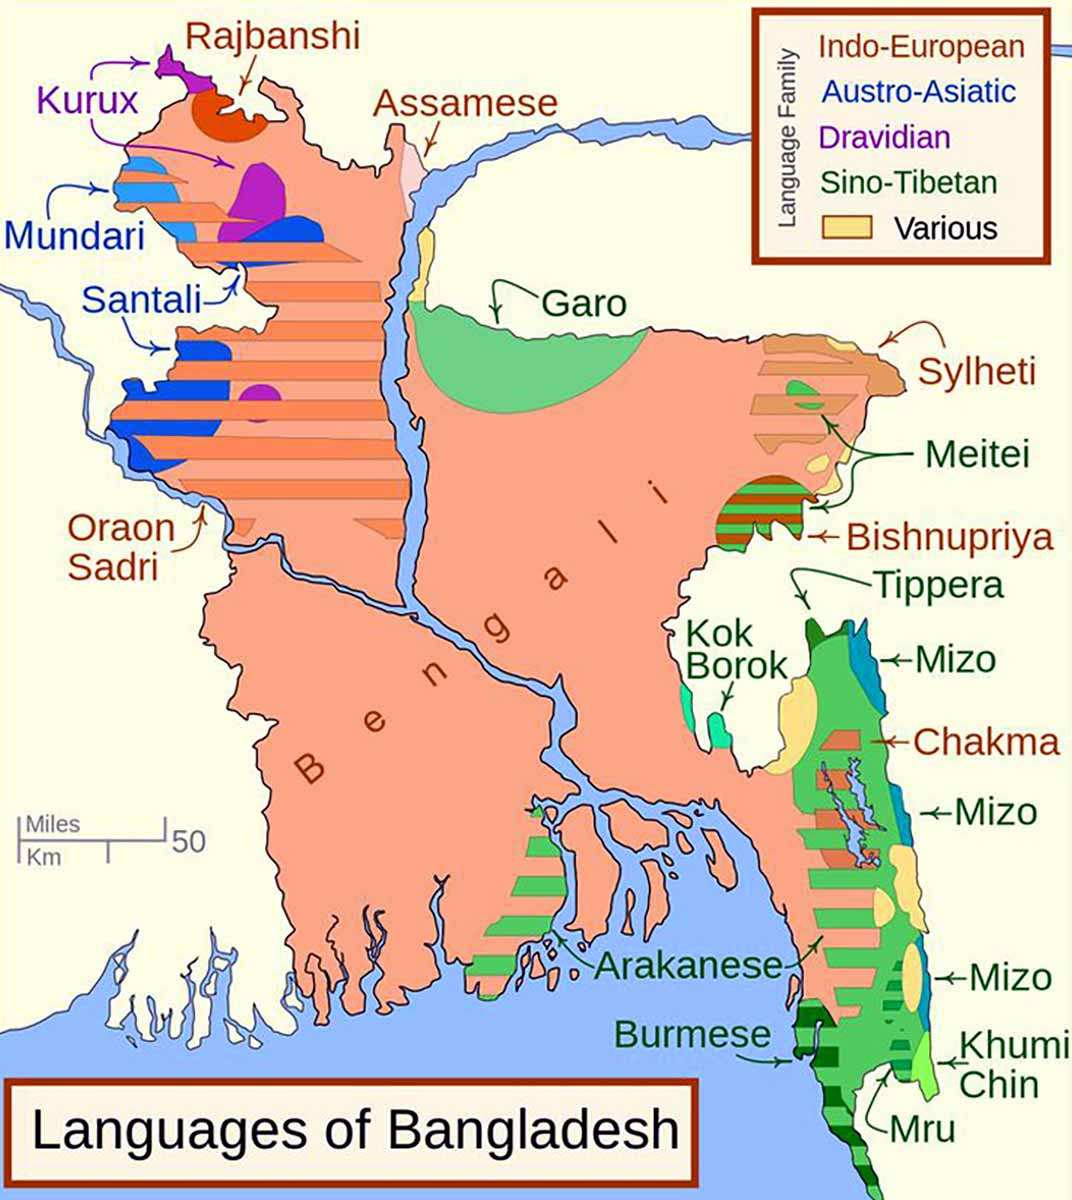 Languages of Bangladesh, including Bengali